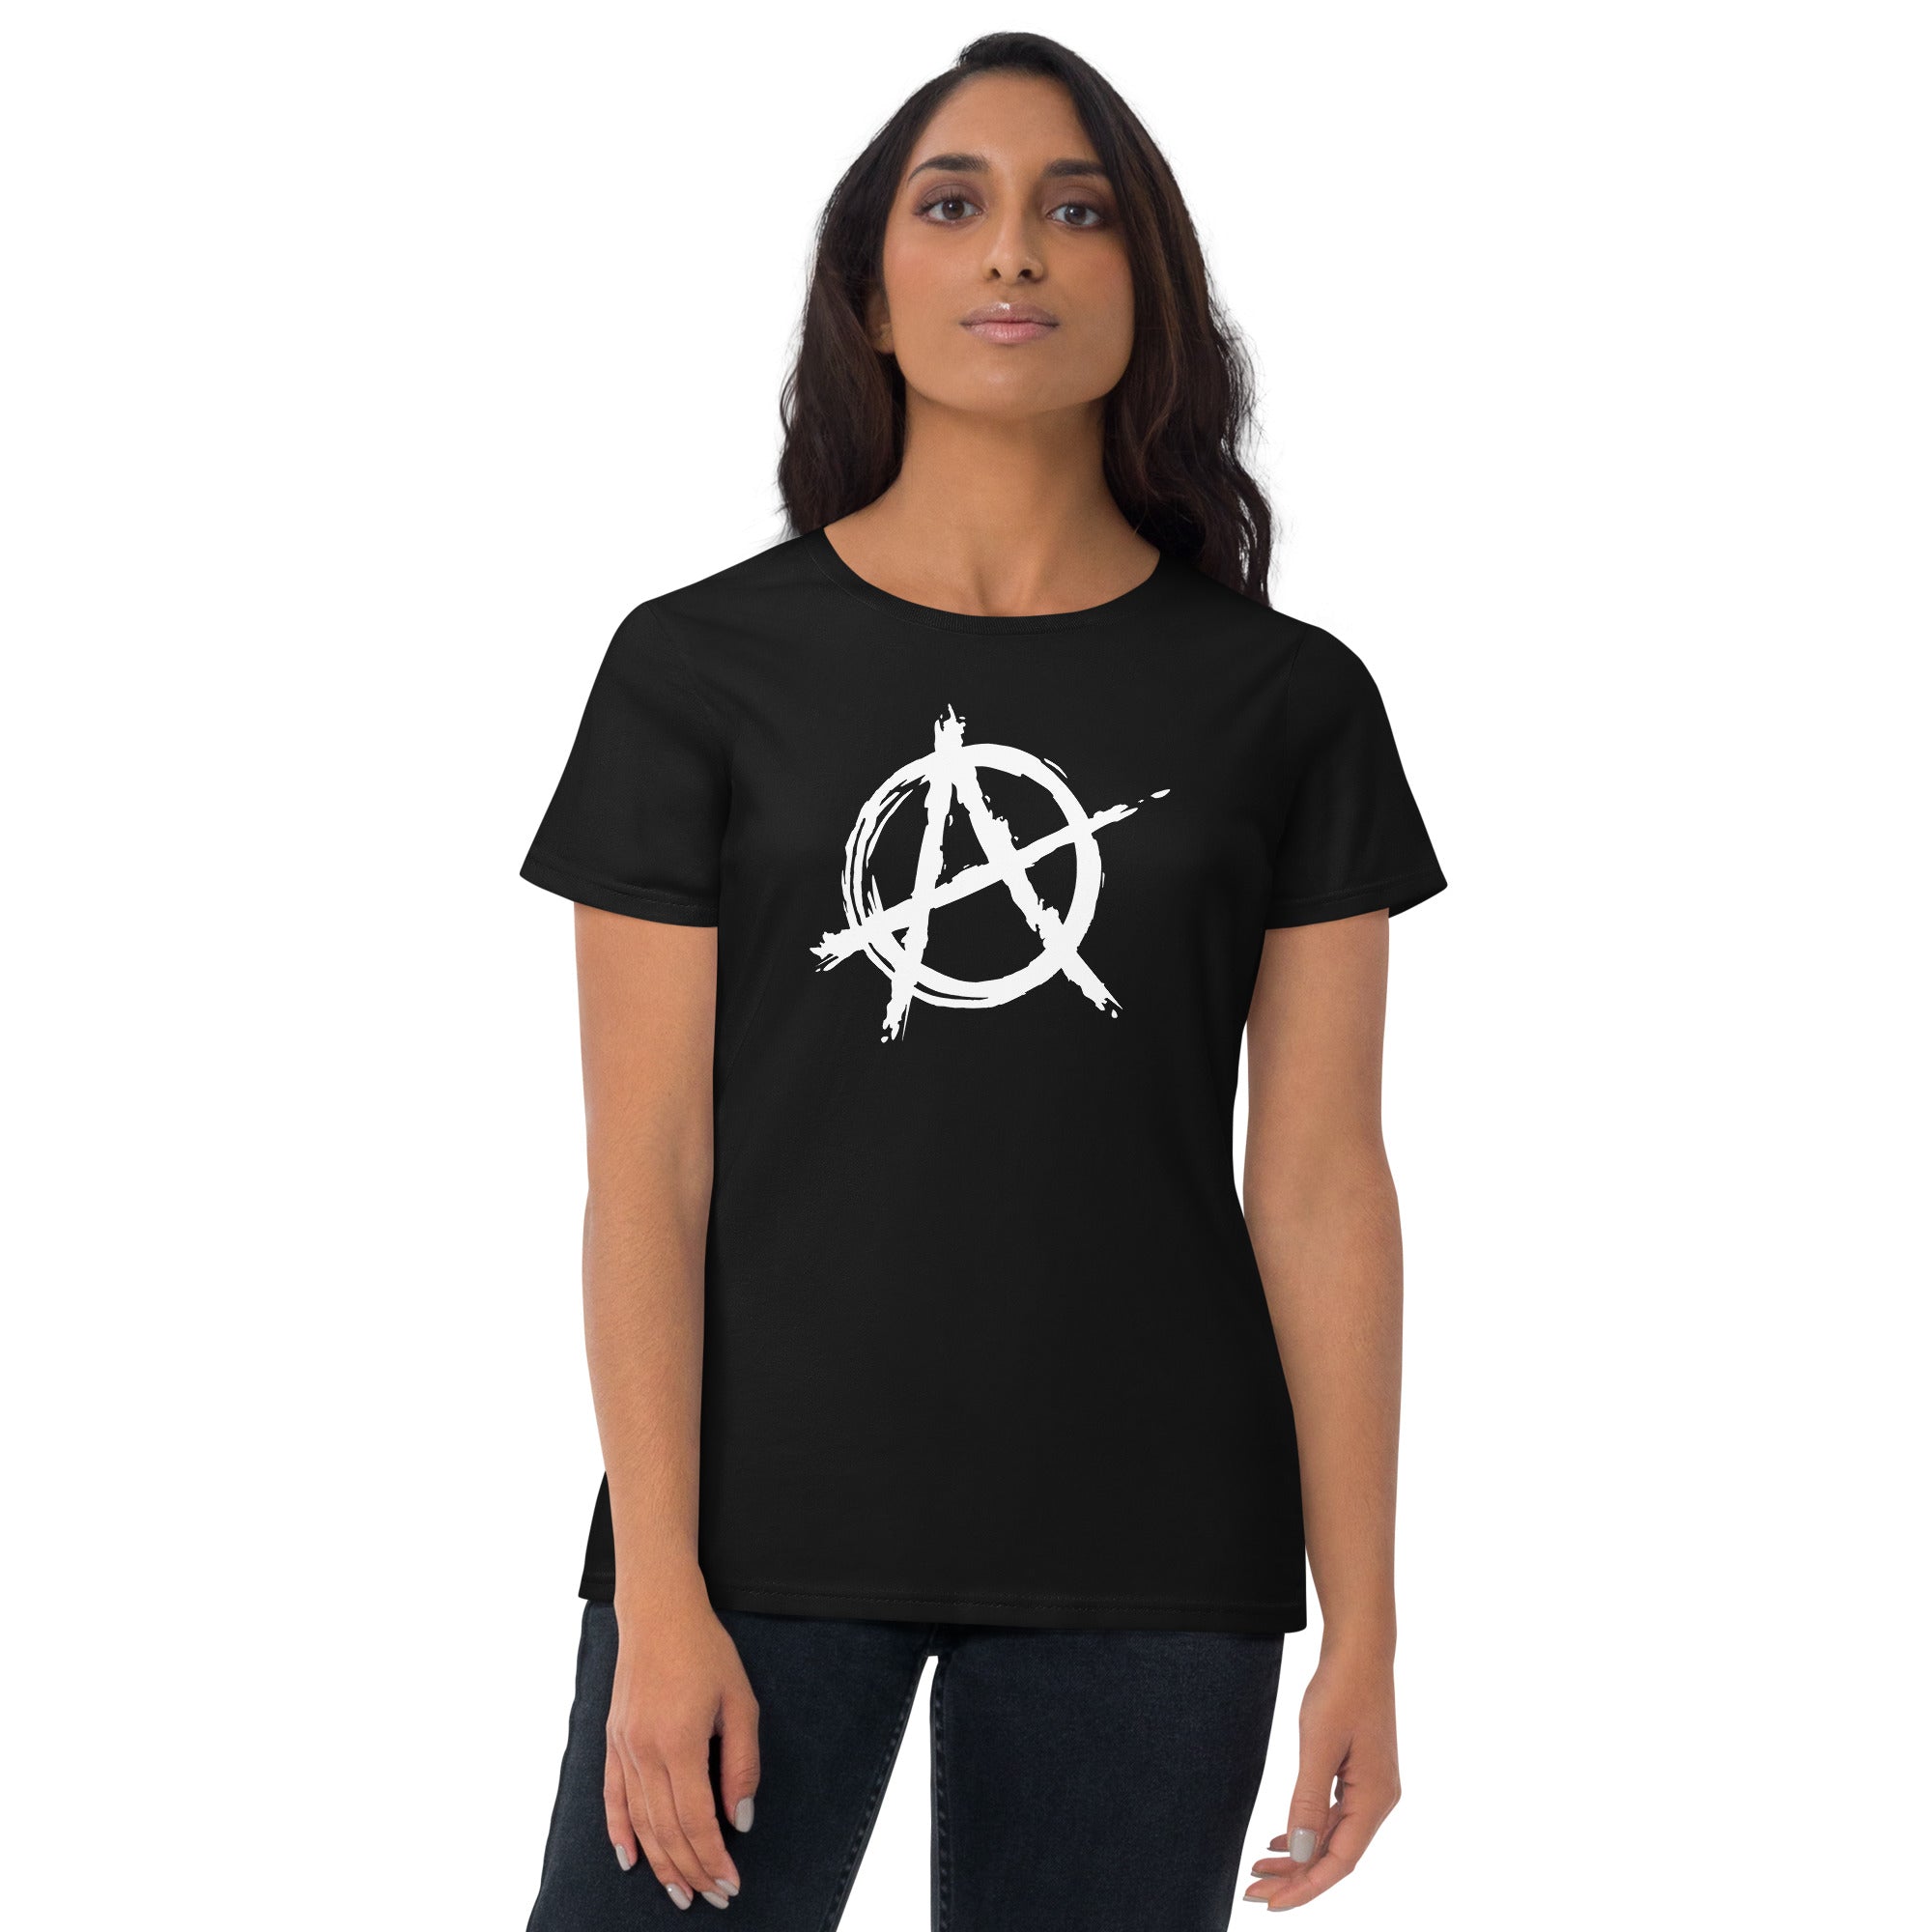 White Anarchy is Order Symbol Punk Rock Women's Short Sleeve Babydoll T-shirt